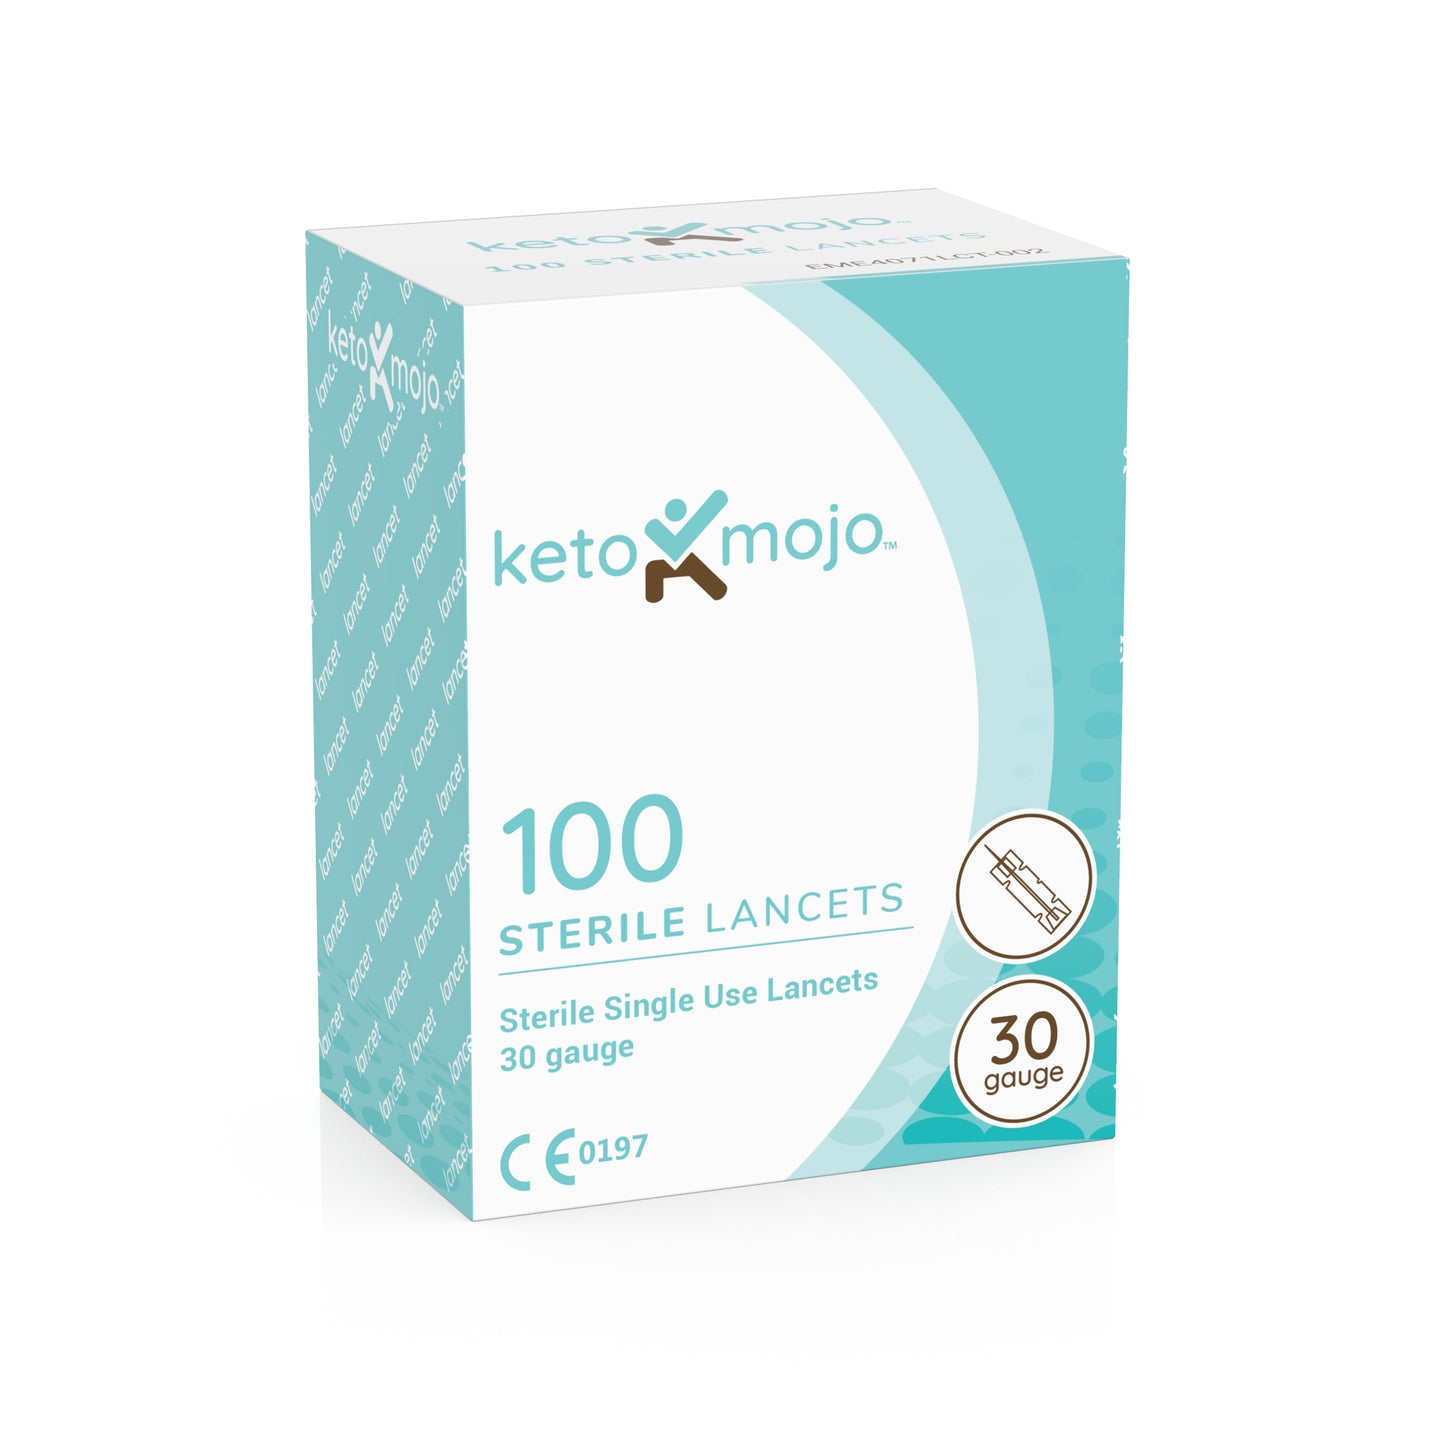 GKI Glucose & Ketone Strip Combo Pack + Lancets - THE SUPER PACK